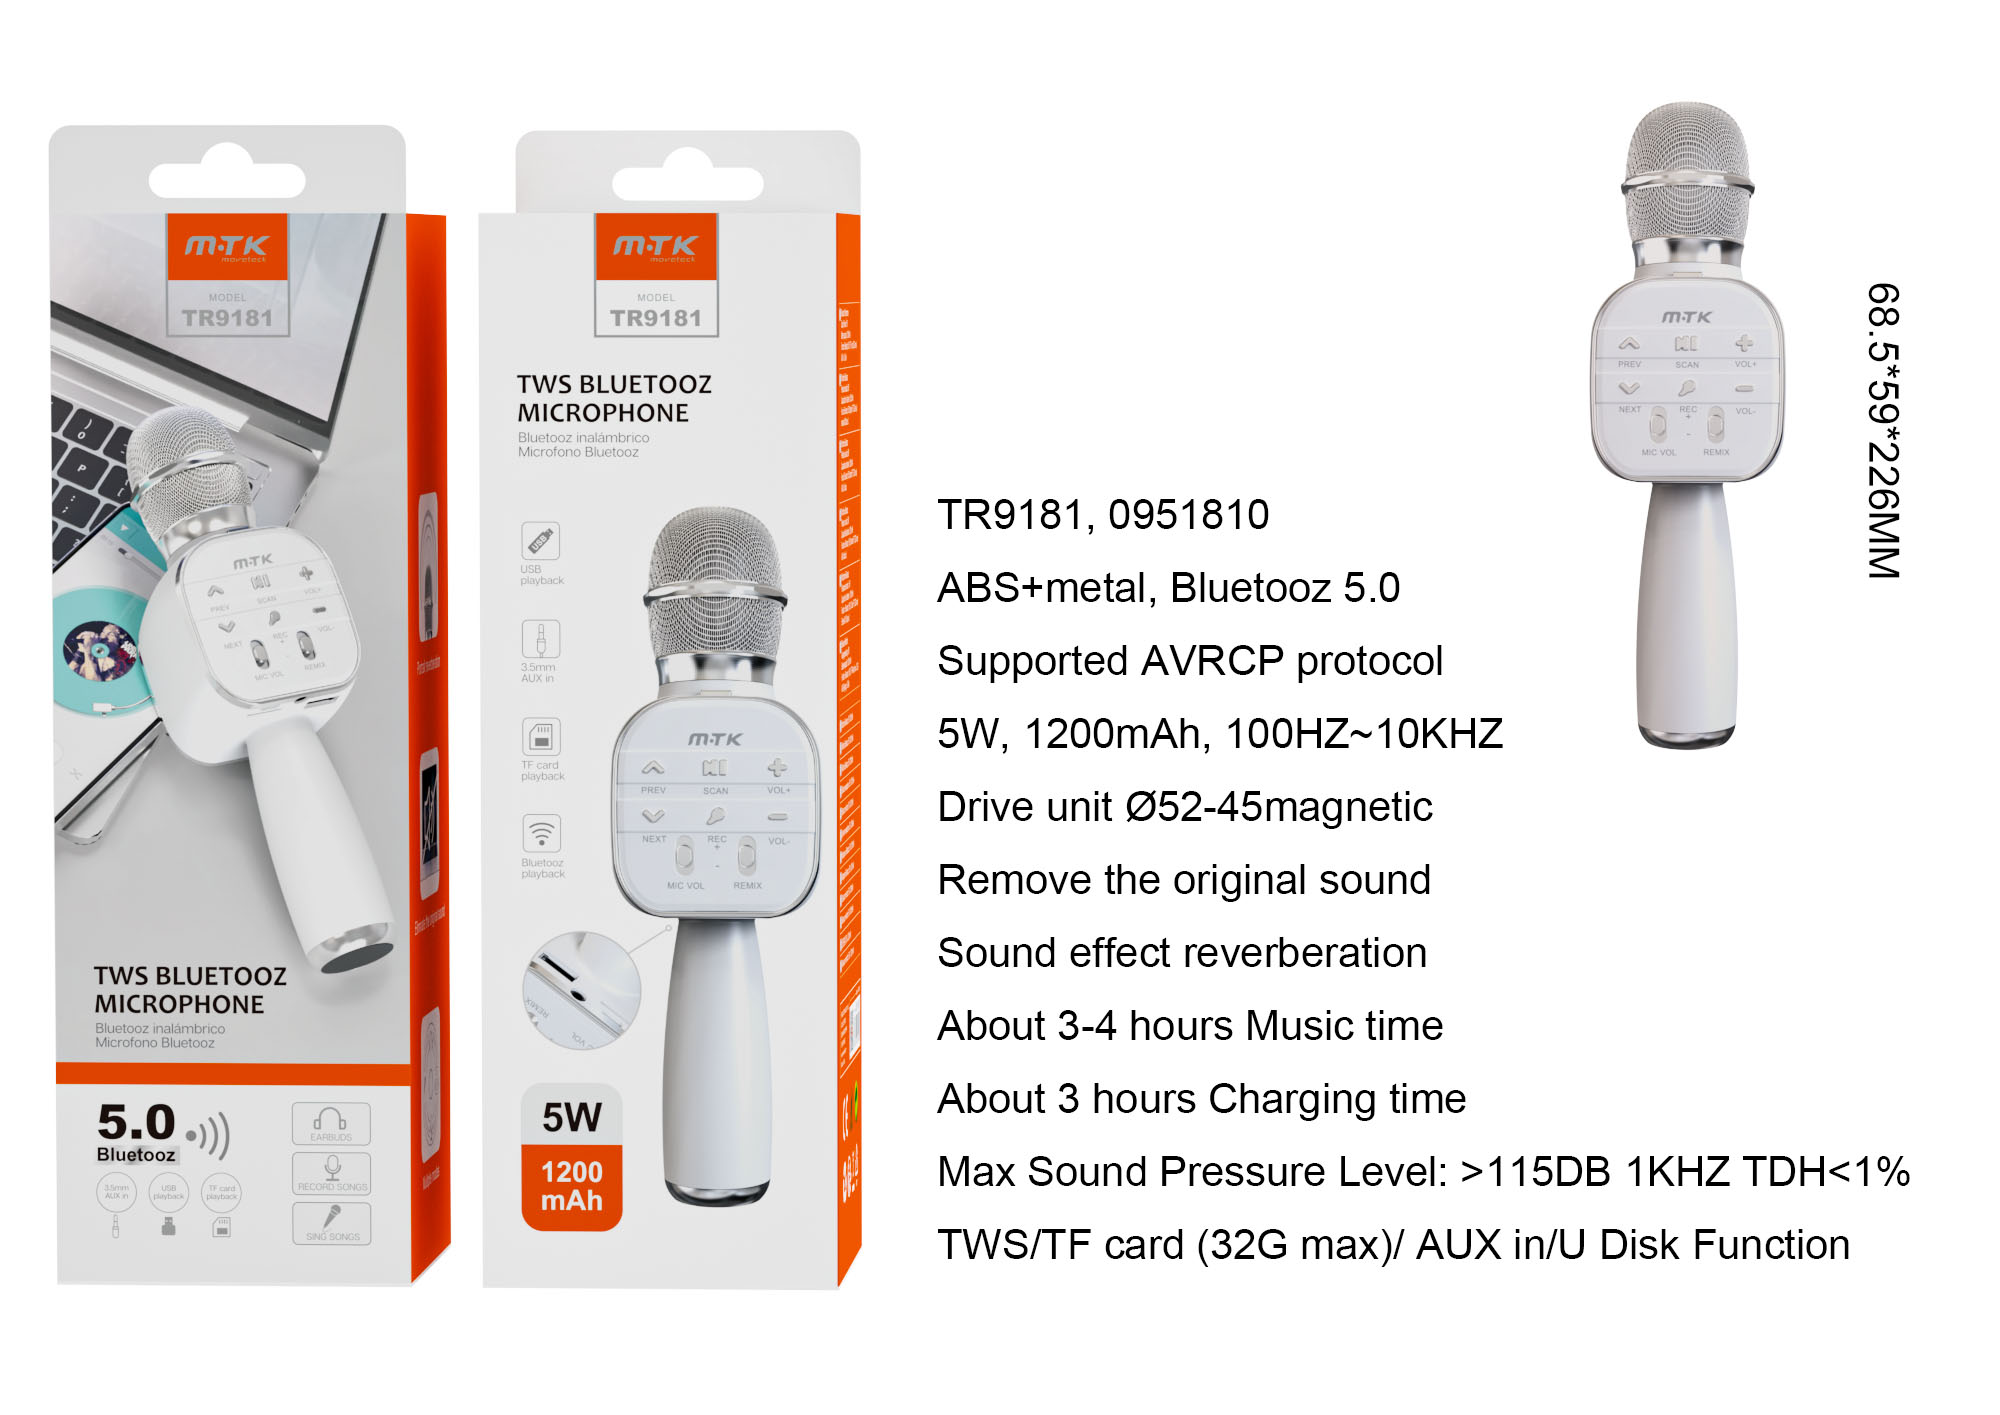 TR9181 PT+BL Microfono TWS Bluetooth 5.0 AVRCP, Frecuncia100Hz-10KHz, Soporta Entrada de audio/USB/TF (32GMax), Bateria 1200mAh/5W, Plata+Blanco